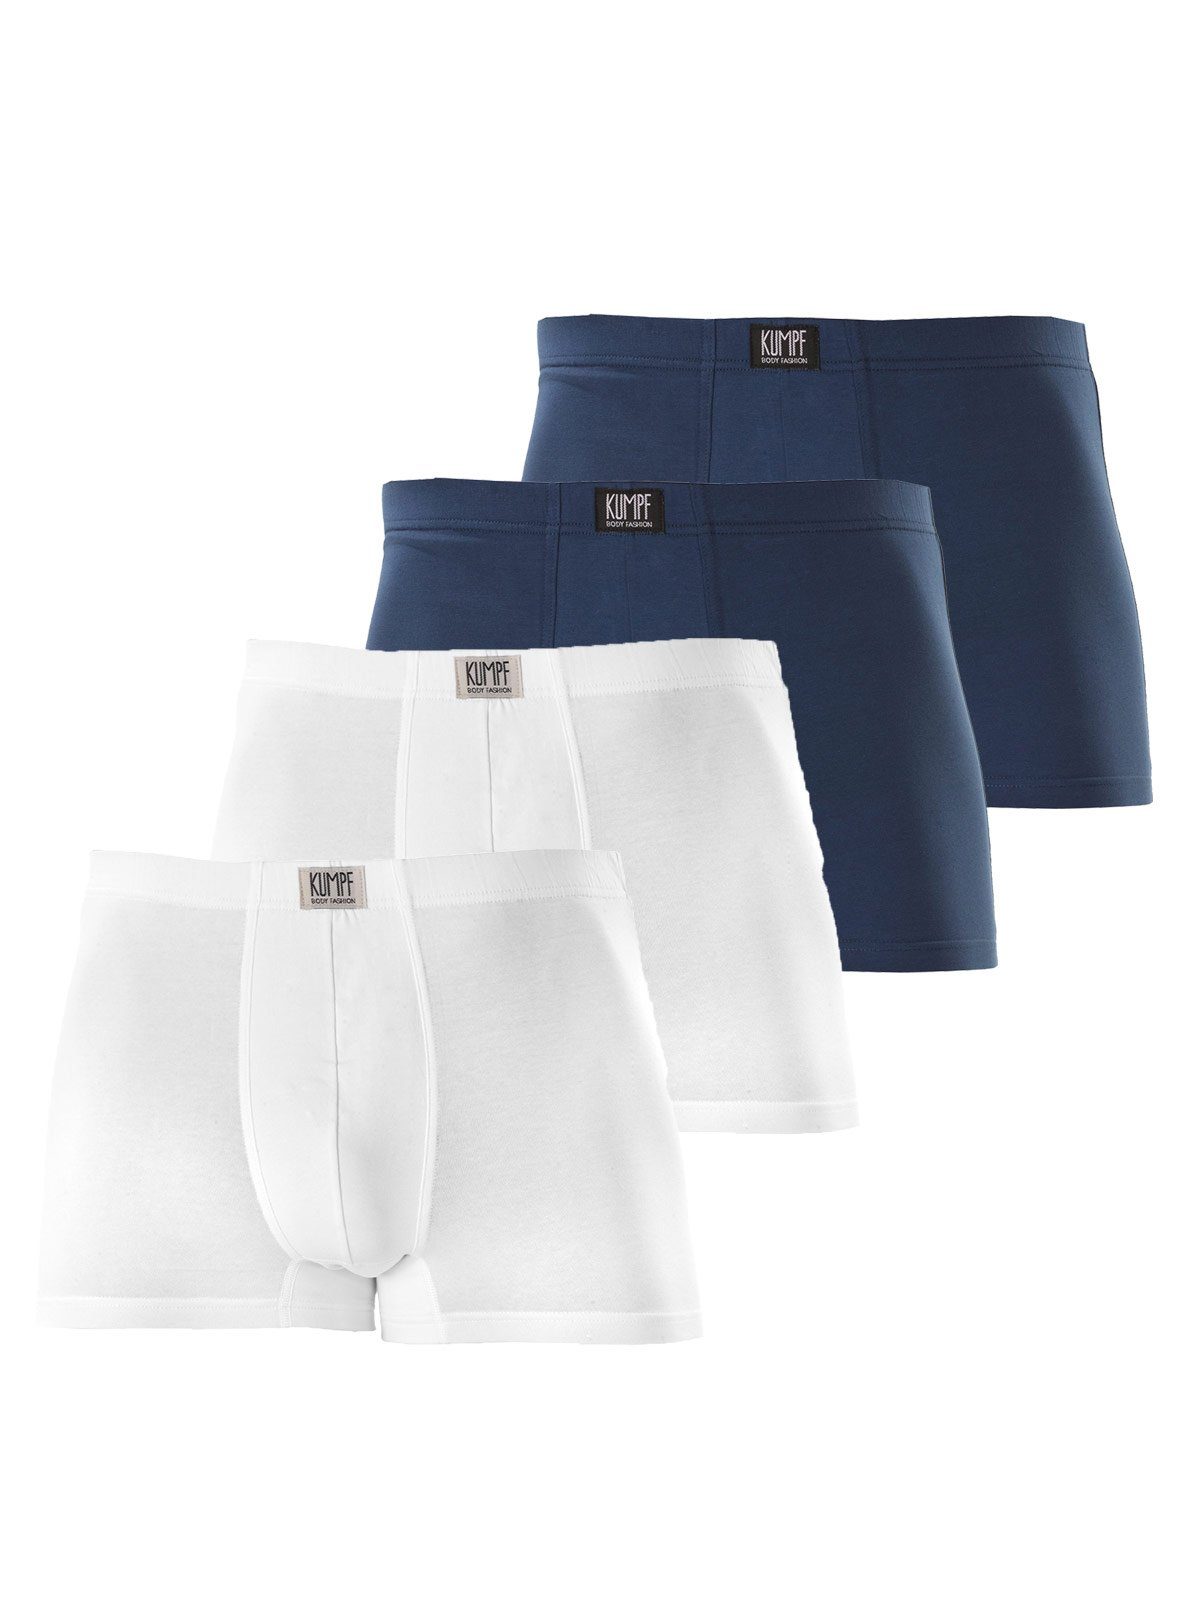 KUMPF Retro Pants Pants Markenqualität darkblue Cotton Bio Herren Sparpack 4er hohe weiss 4-St) (Spar-Set